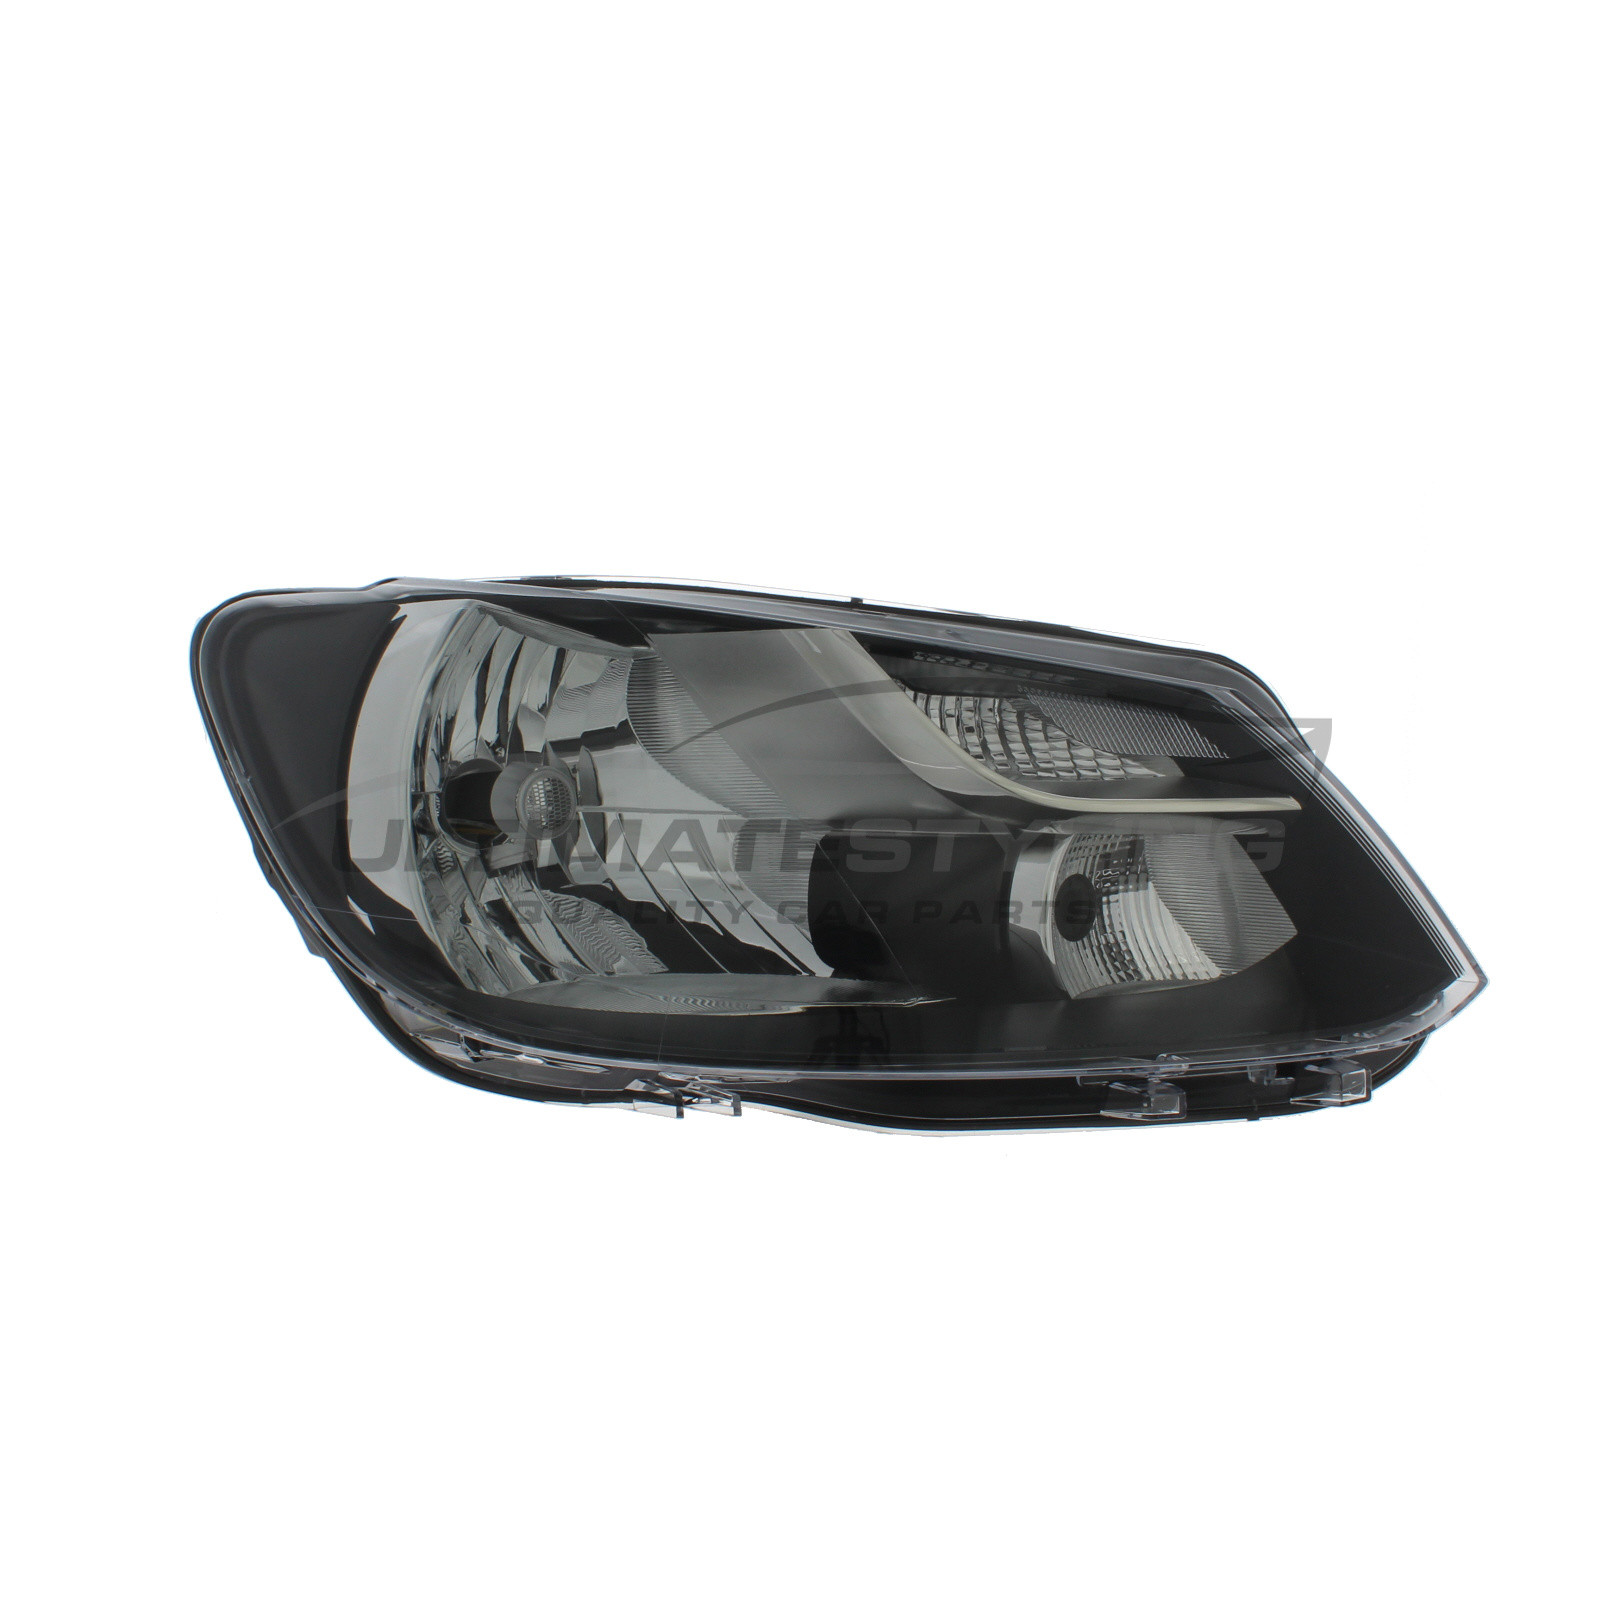 Volkswagen Caddy / Touran Headlight / Headlamp - Drivers Side (RH